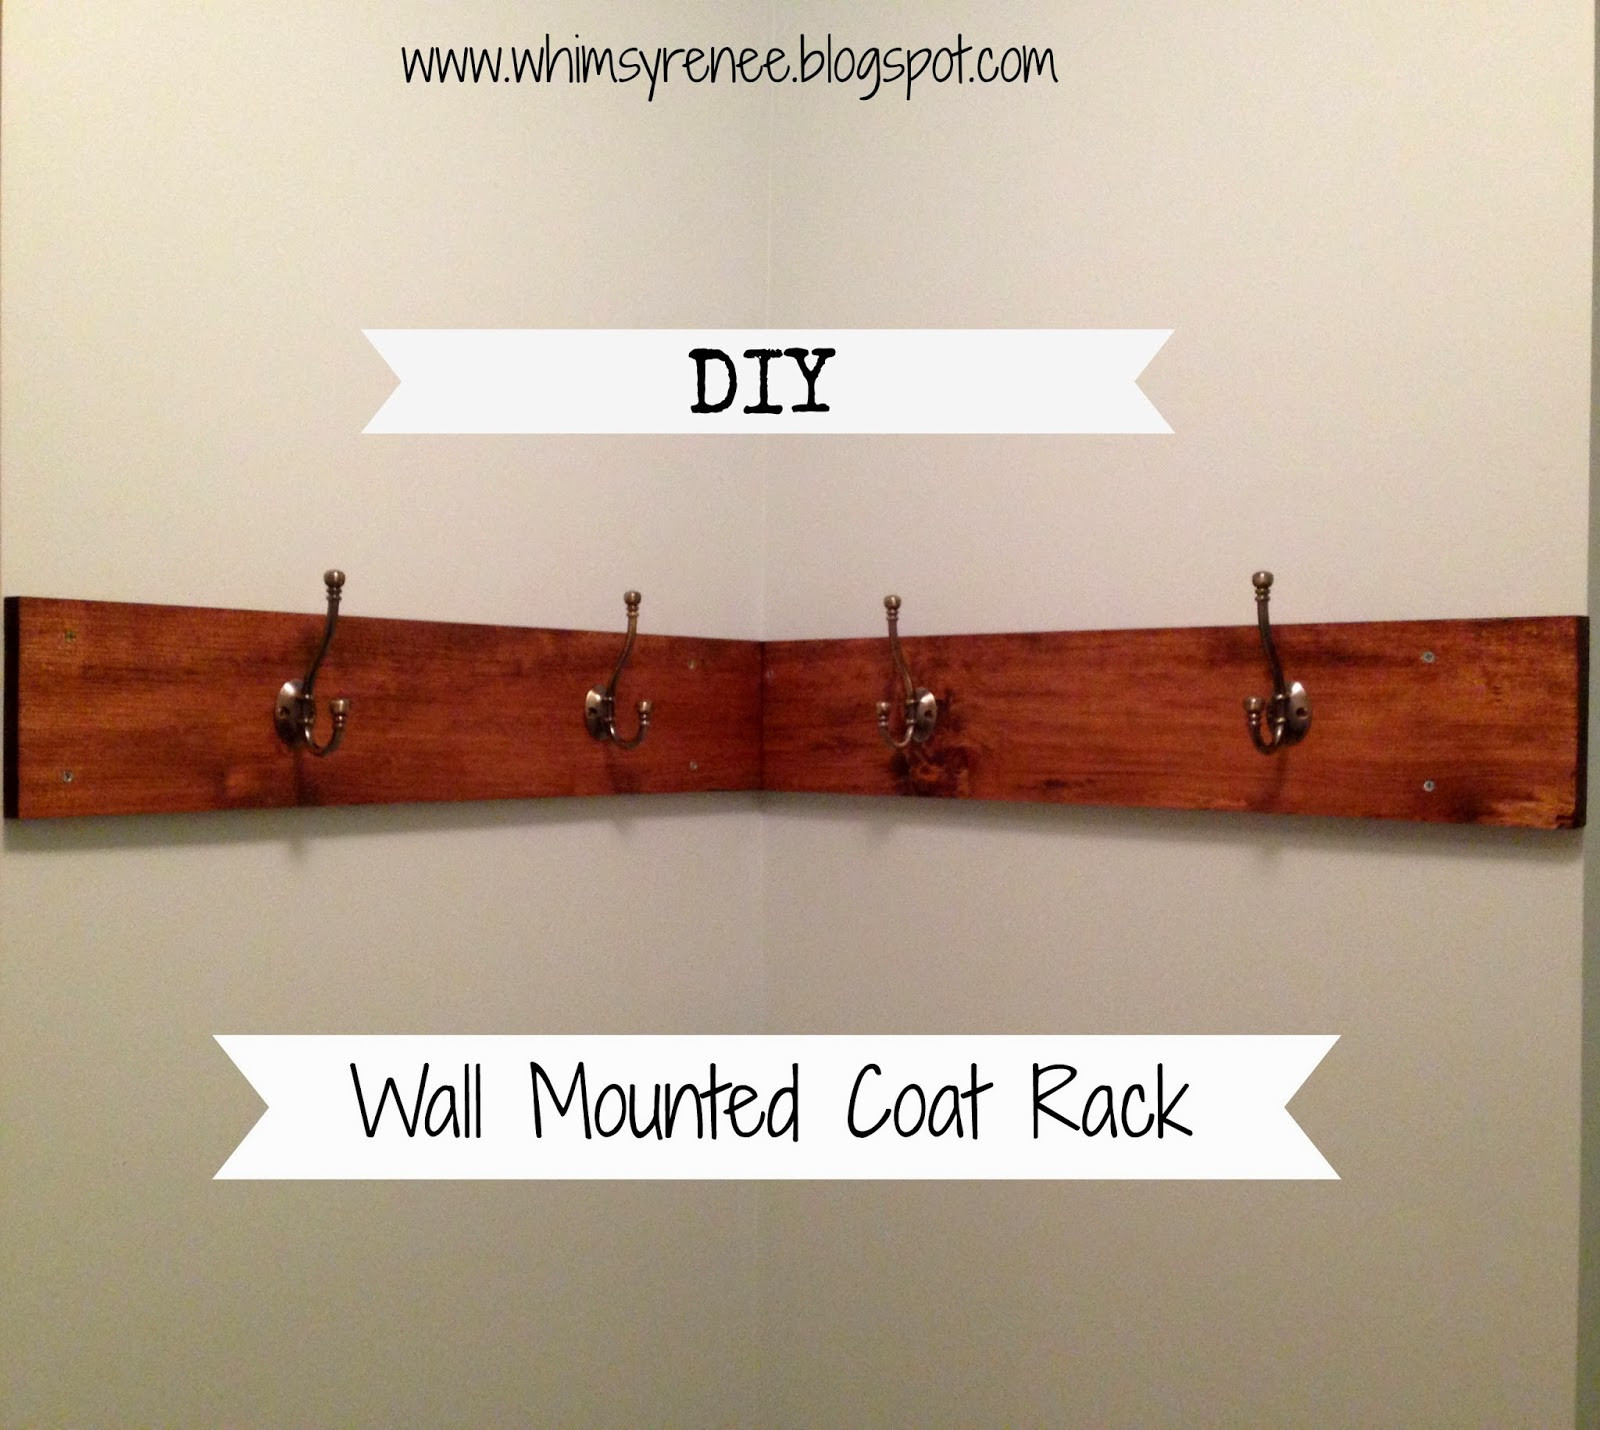 DIY Wall Mount Coat Rack
 Whimsy Renee DIY Wall Mounted Coat Rack